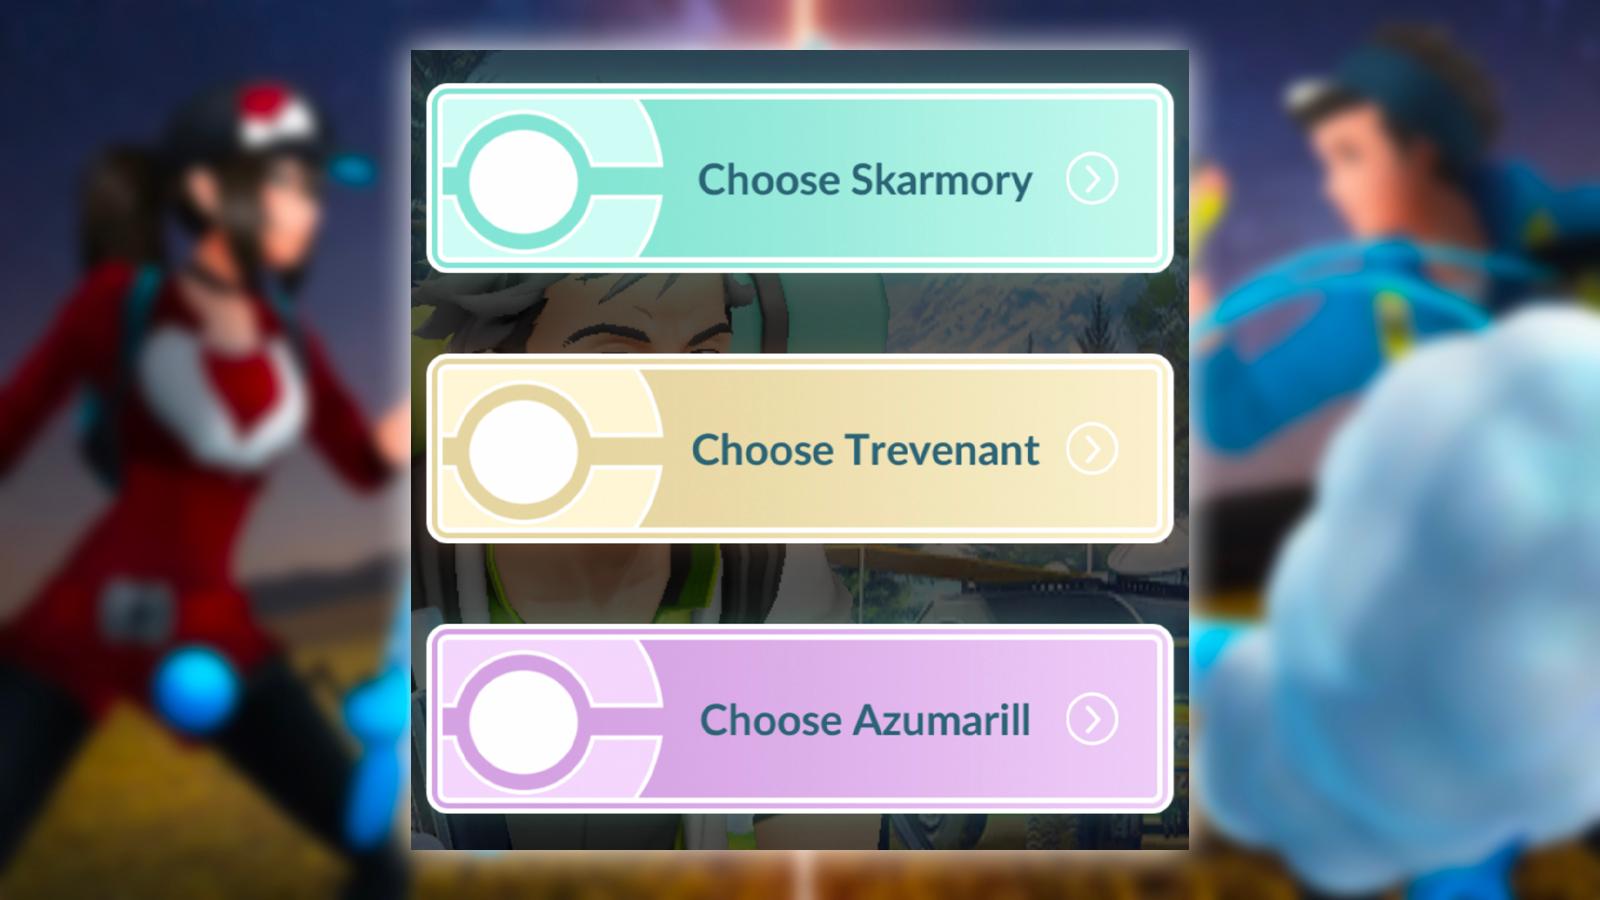 Pokémon Go Alola to Alola research steps, best Choose Path choice